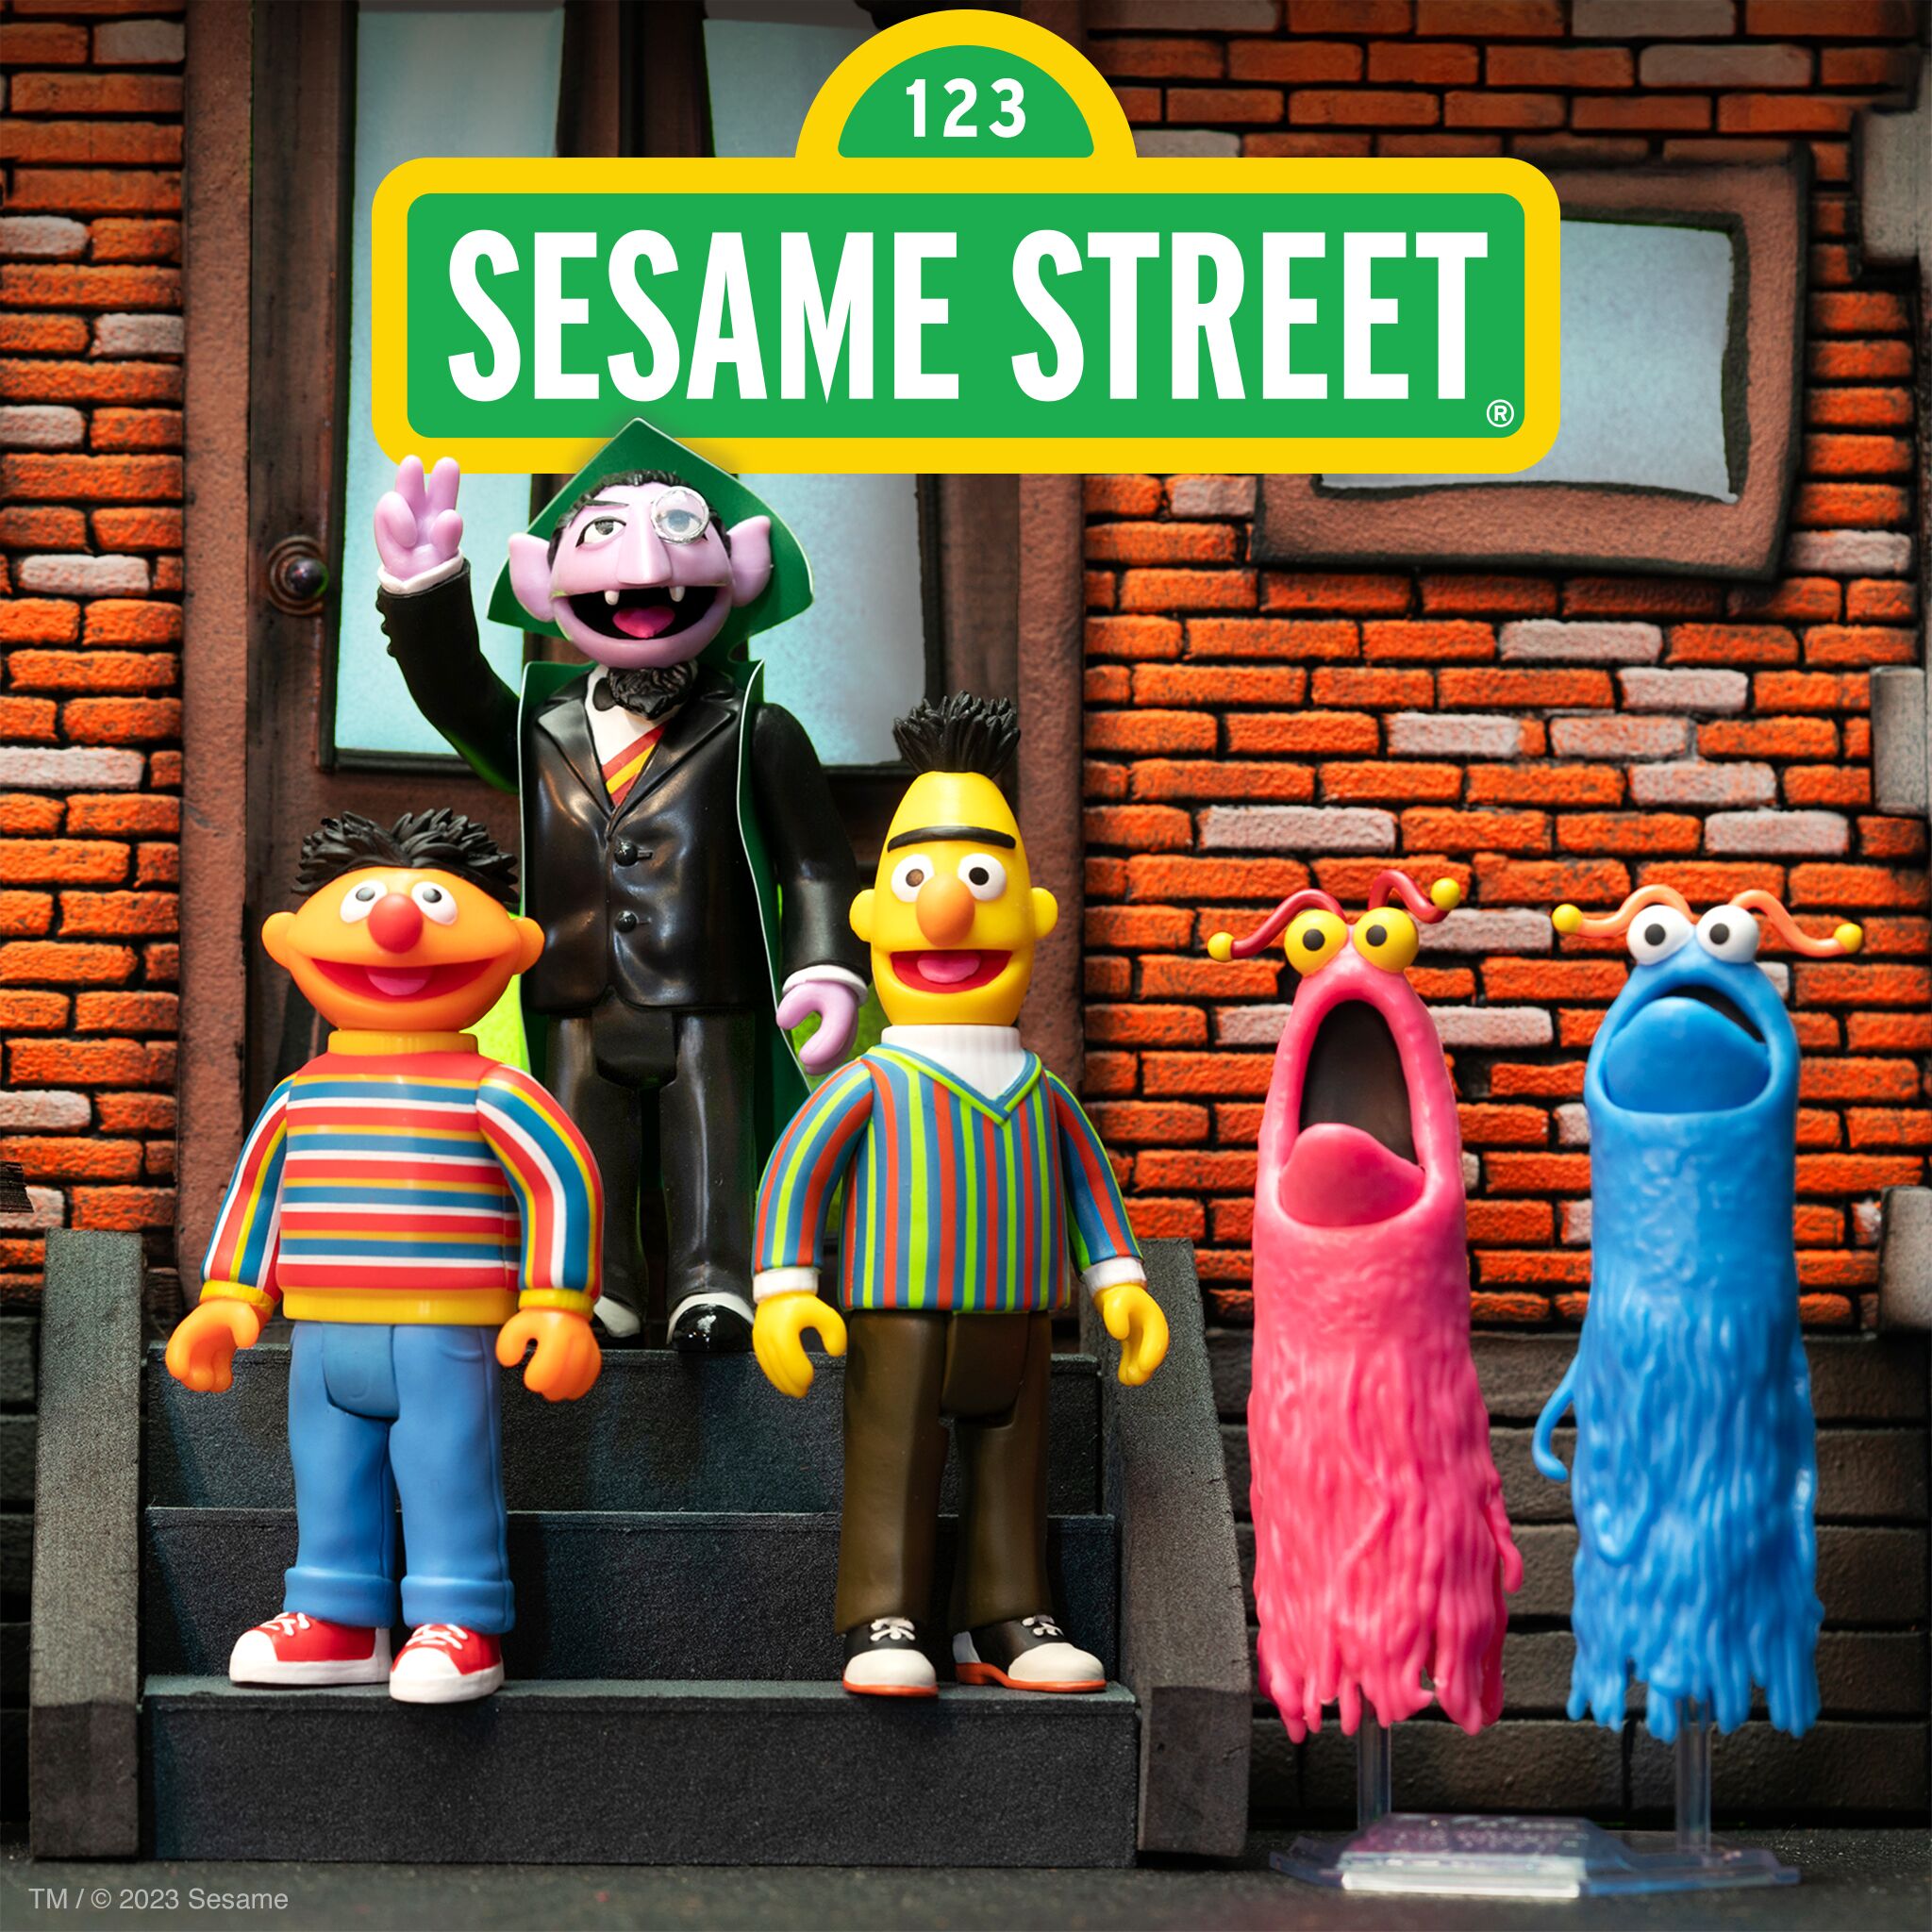 Sesame Street ReAction Figures Wave 01 - Count von Count